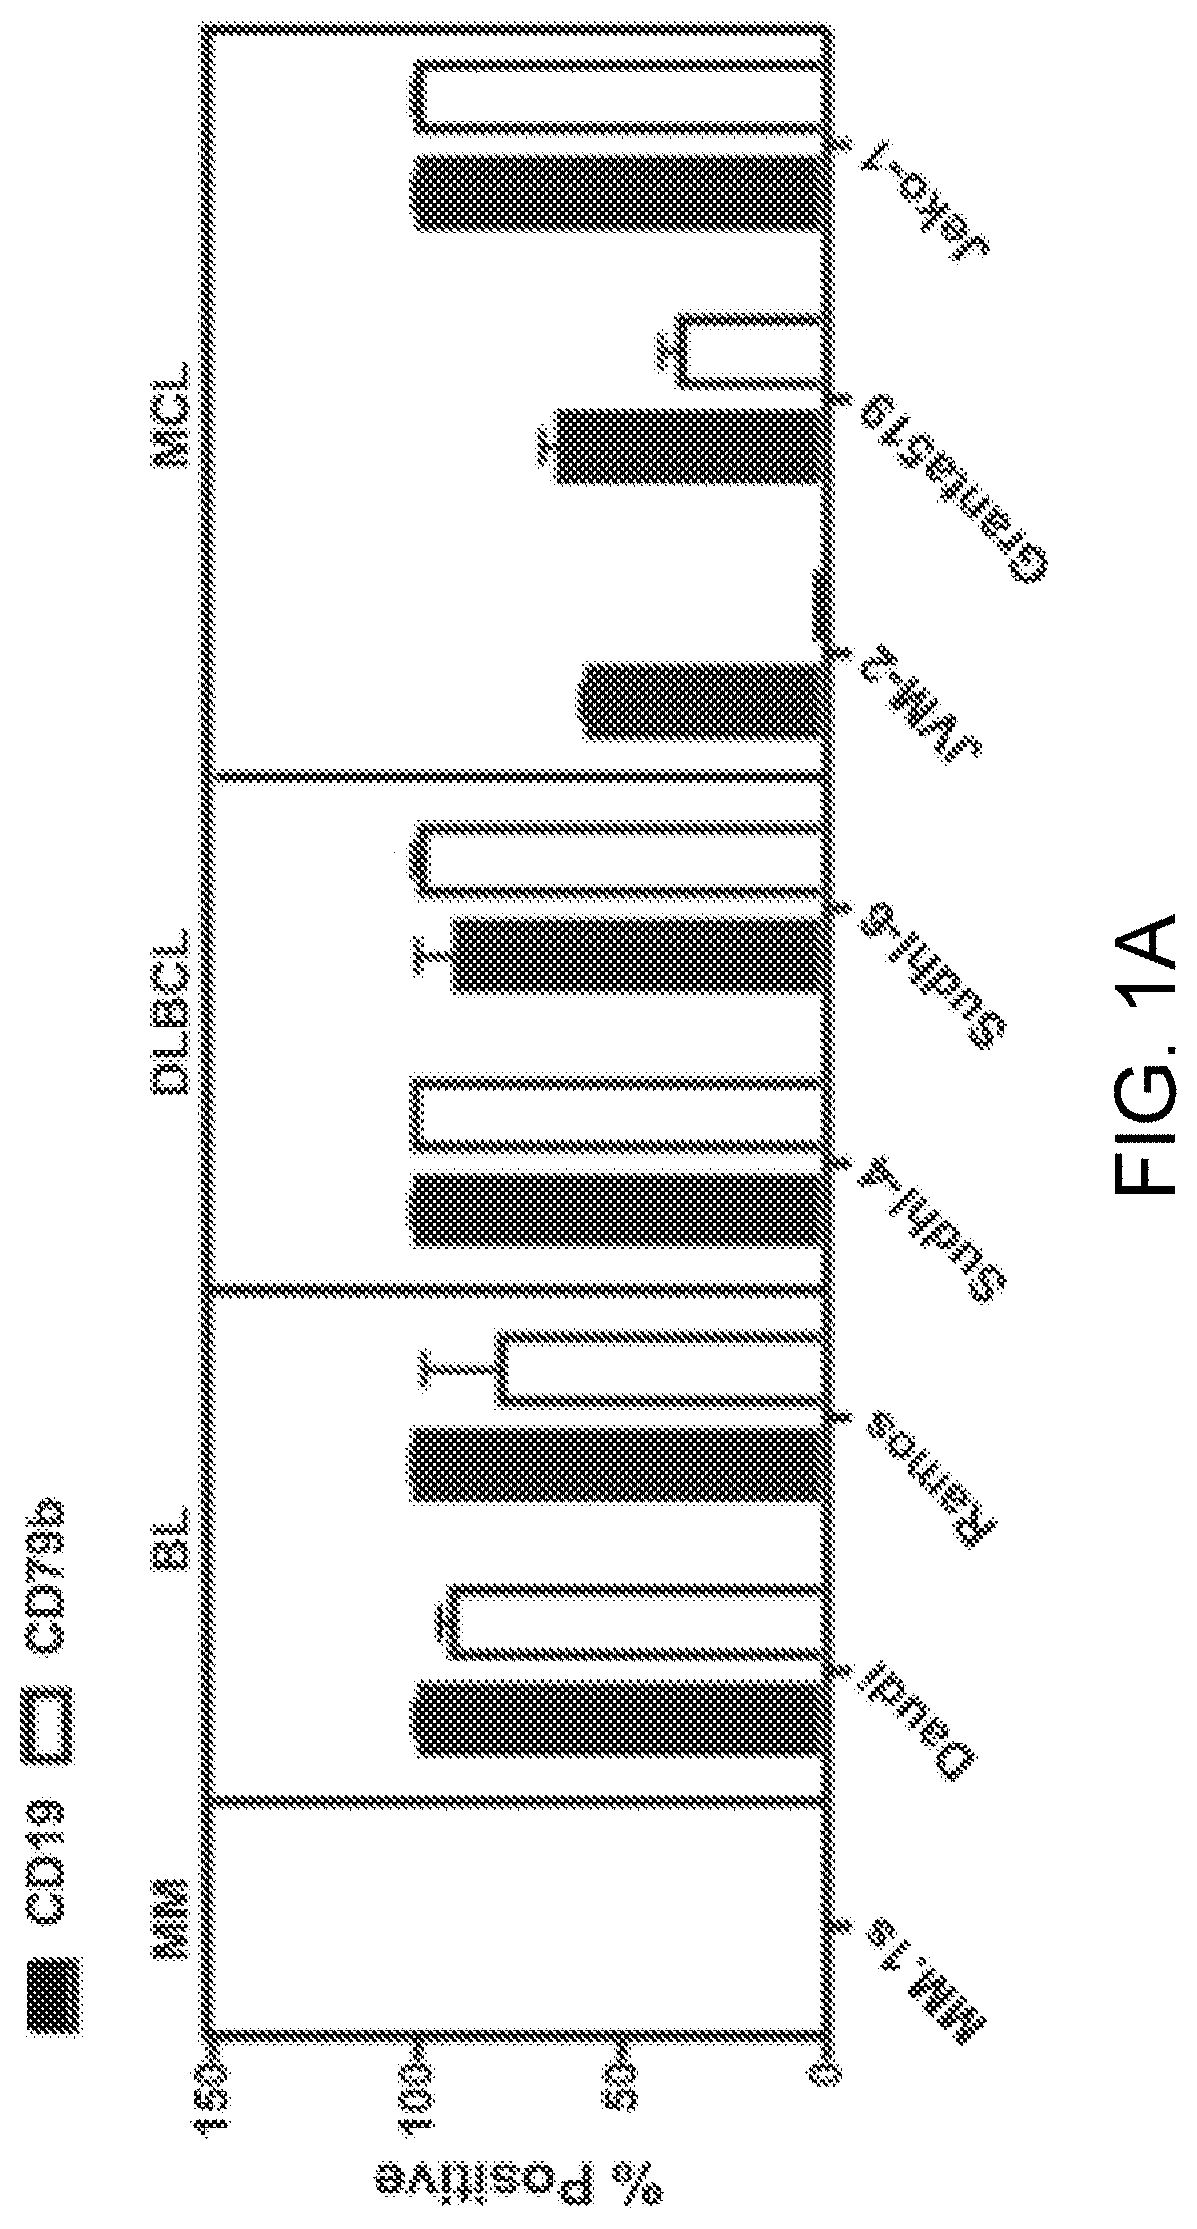 Chimeric antigen receptors targeting cd79b and cd19